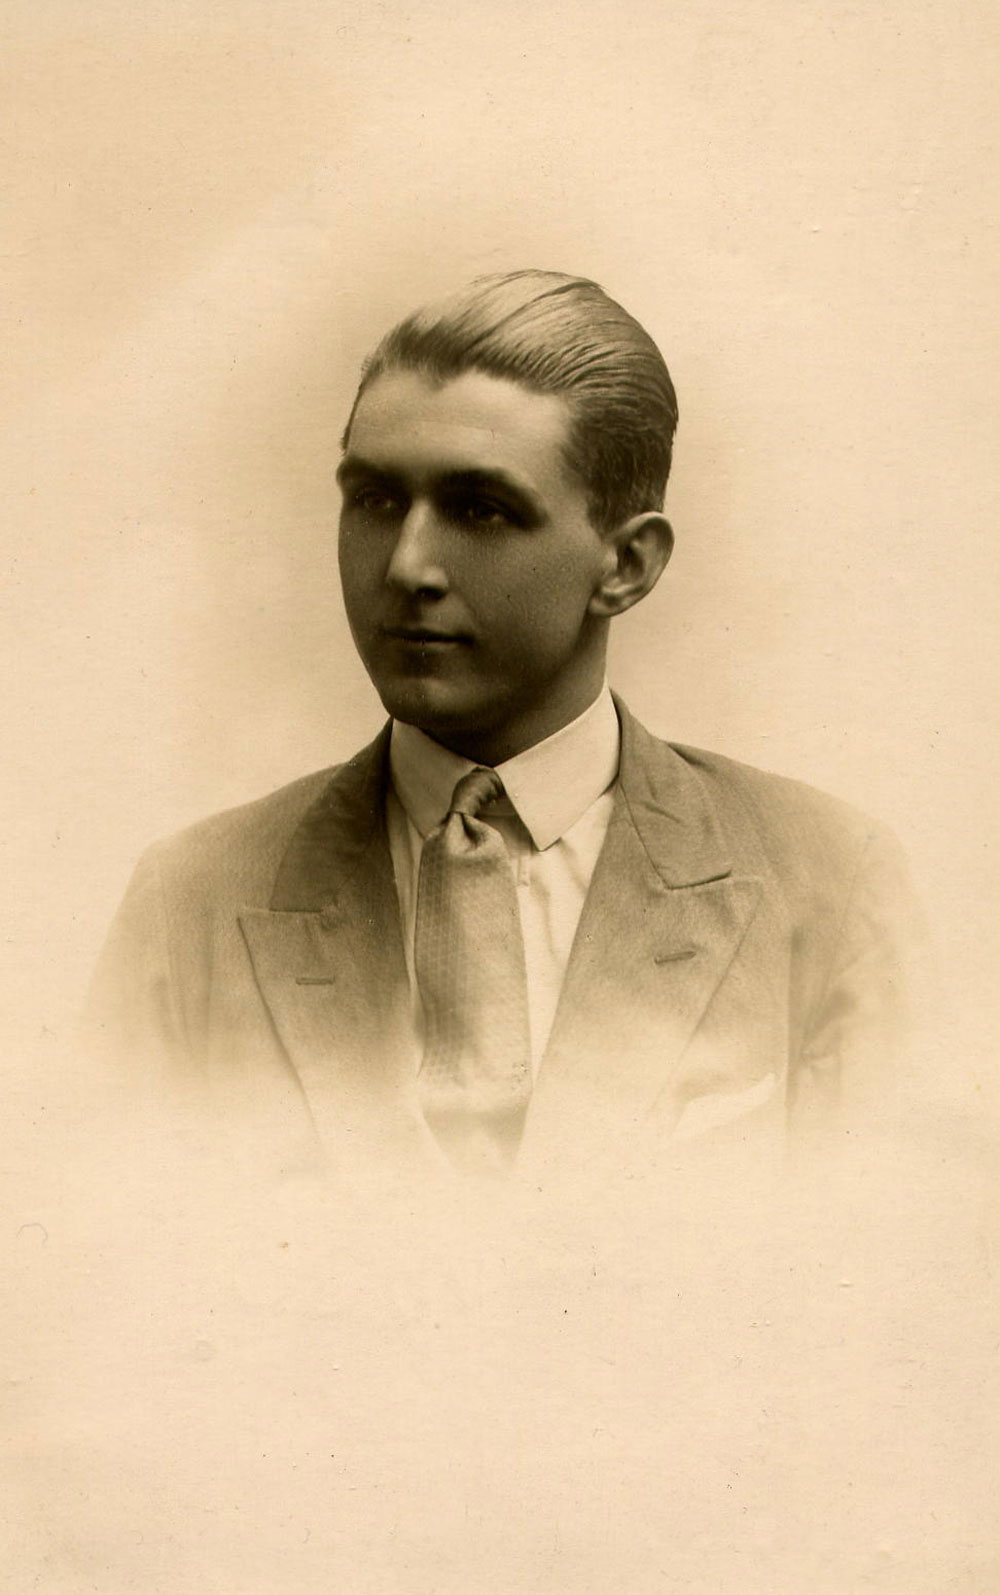 Rhys' great-grandfather, Thomas Atkins